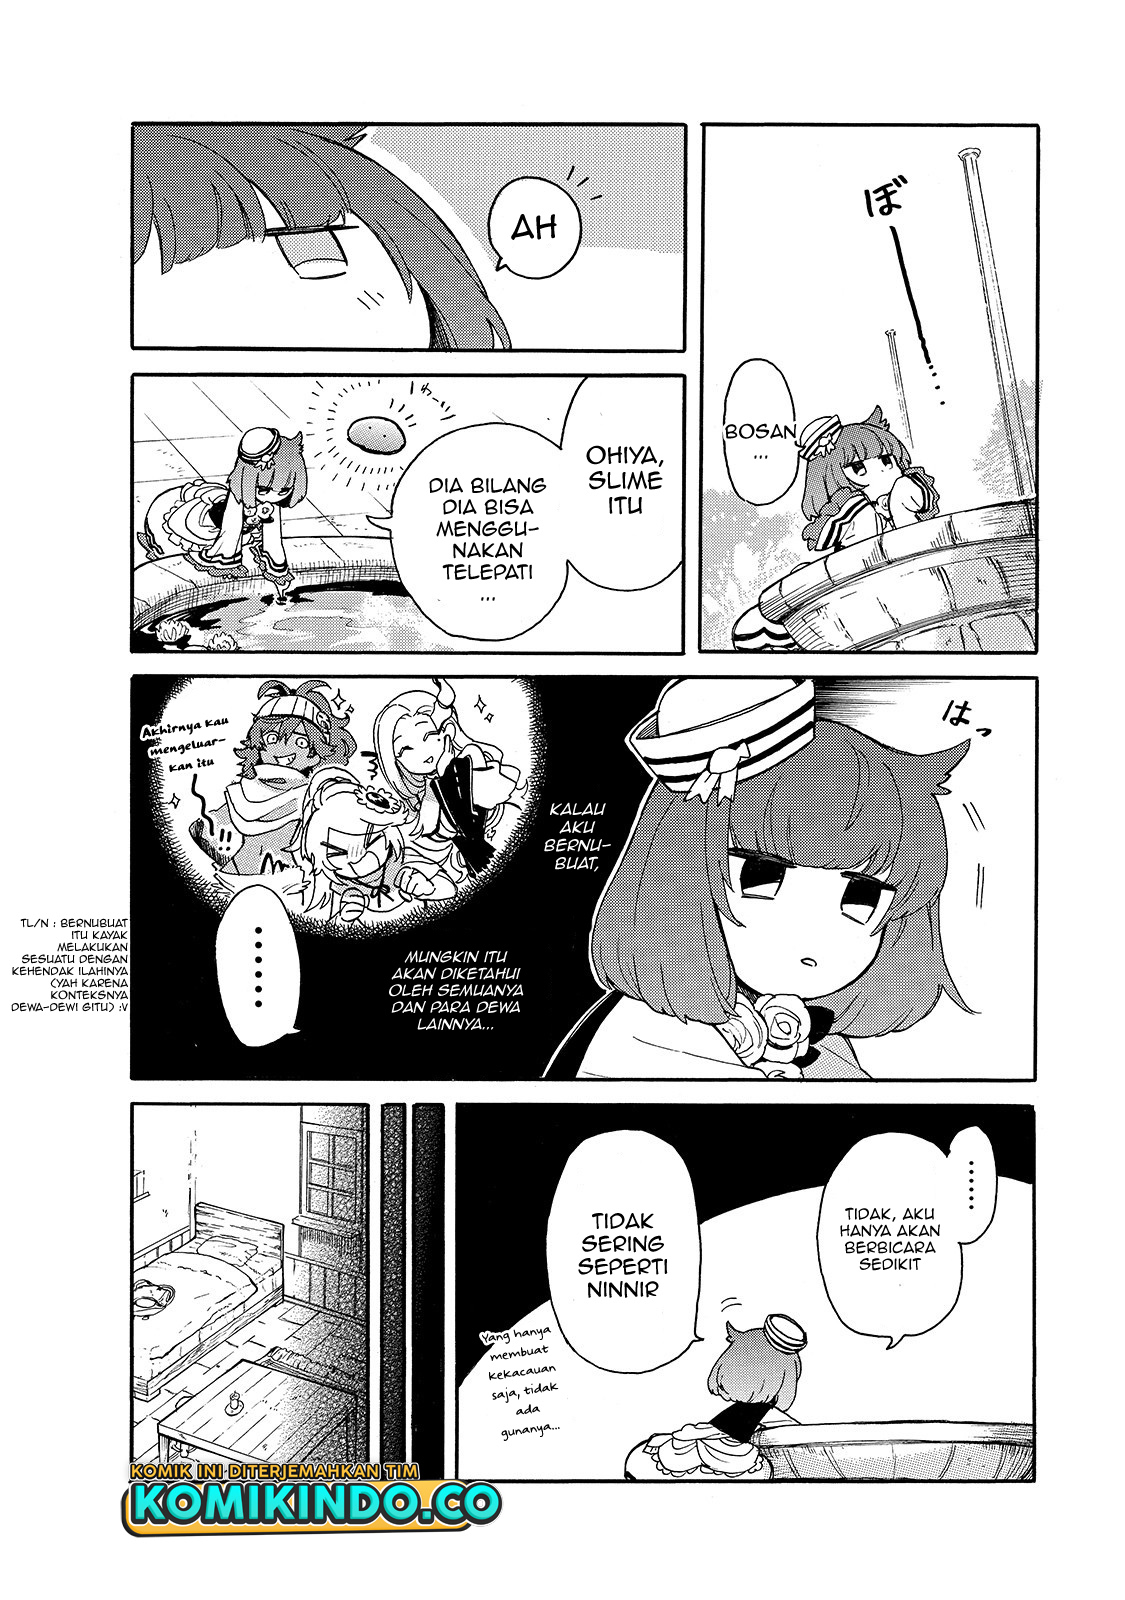 Tondemo Skill de Isekai Hourou Meshi: Sui no Daibouken Chapter 28